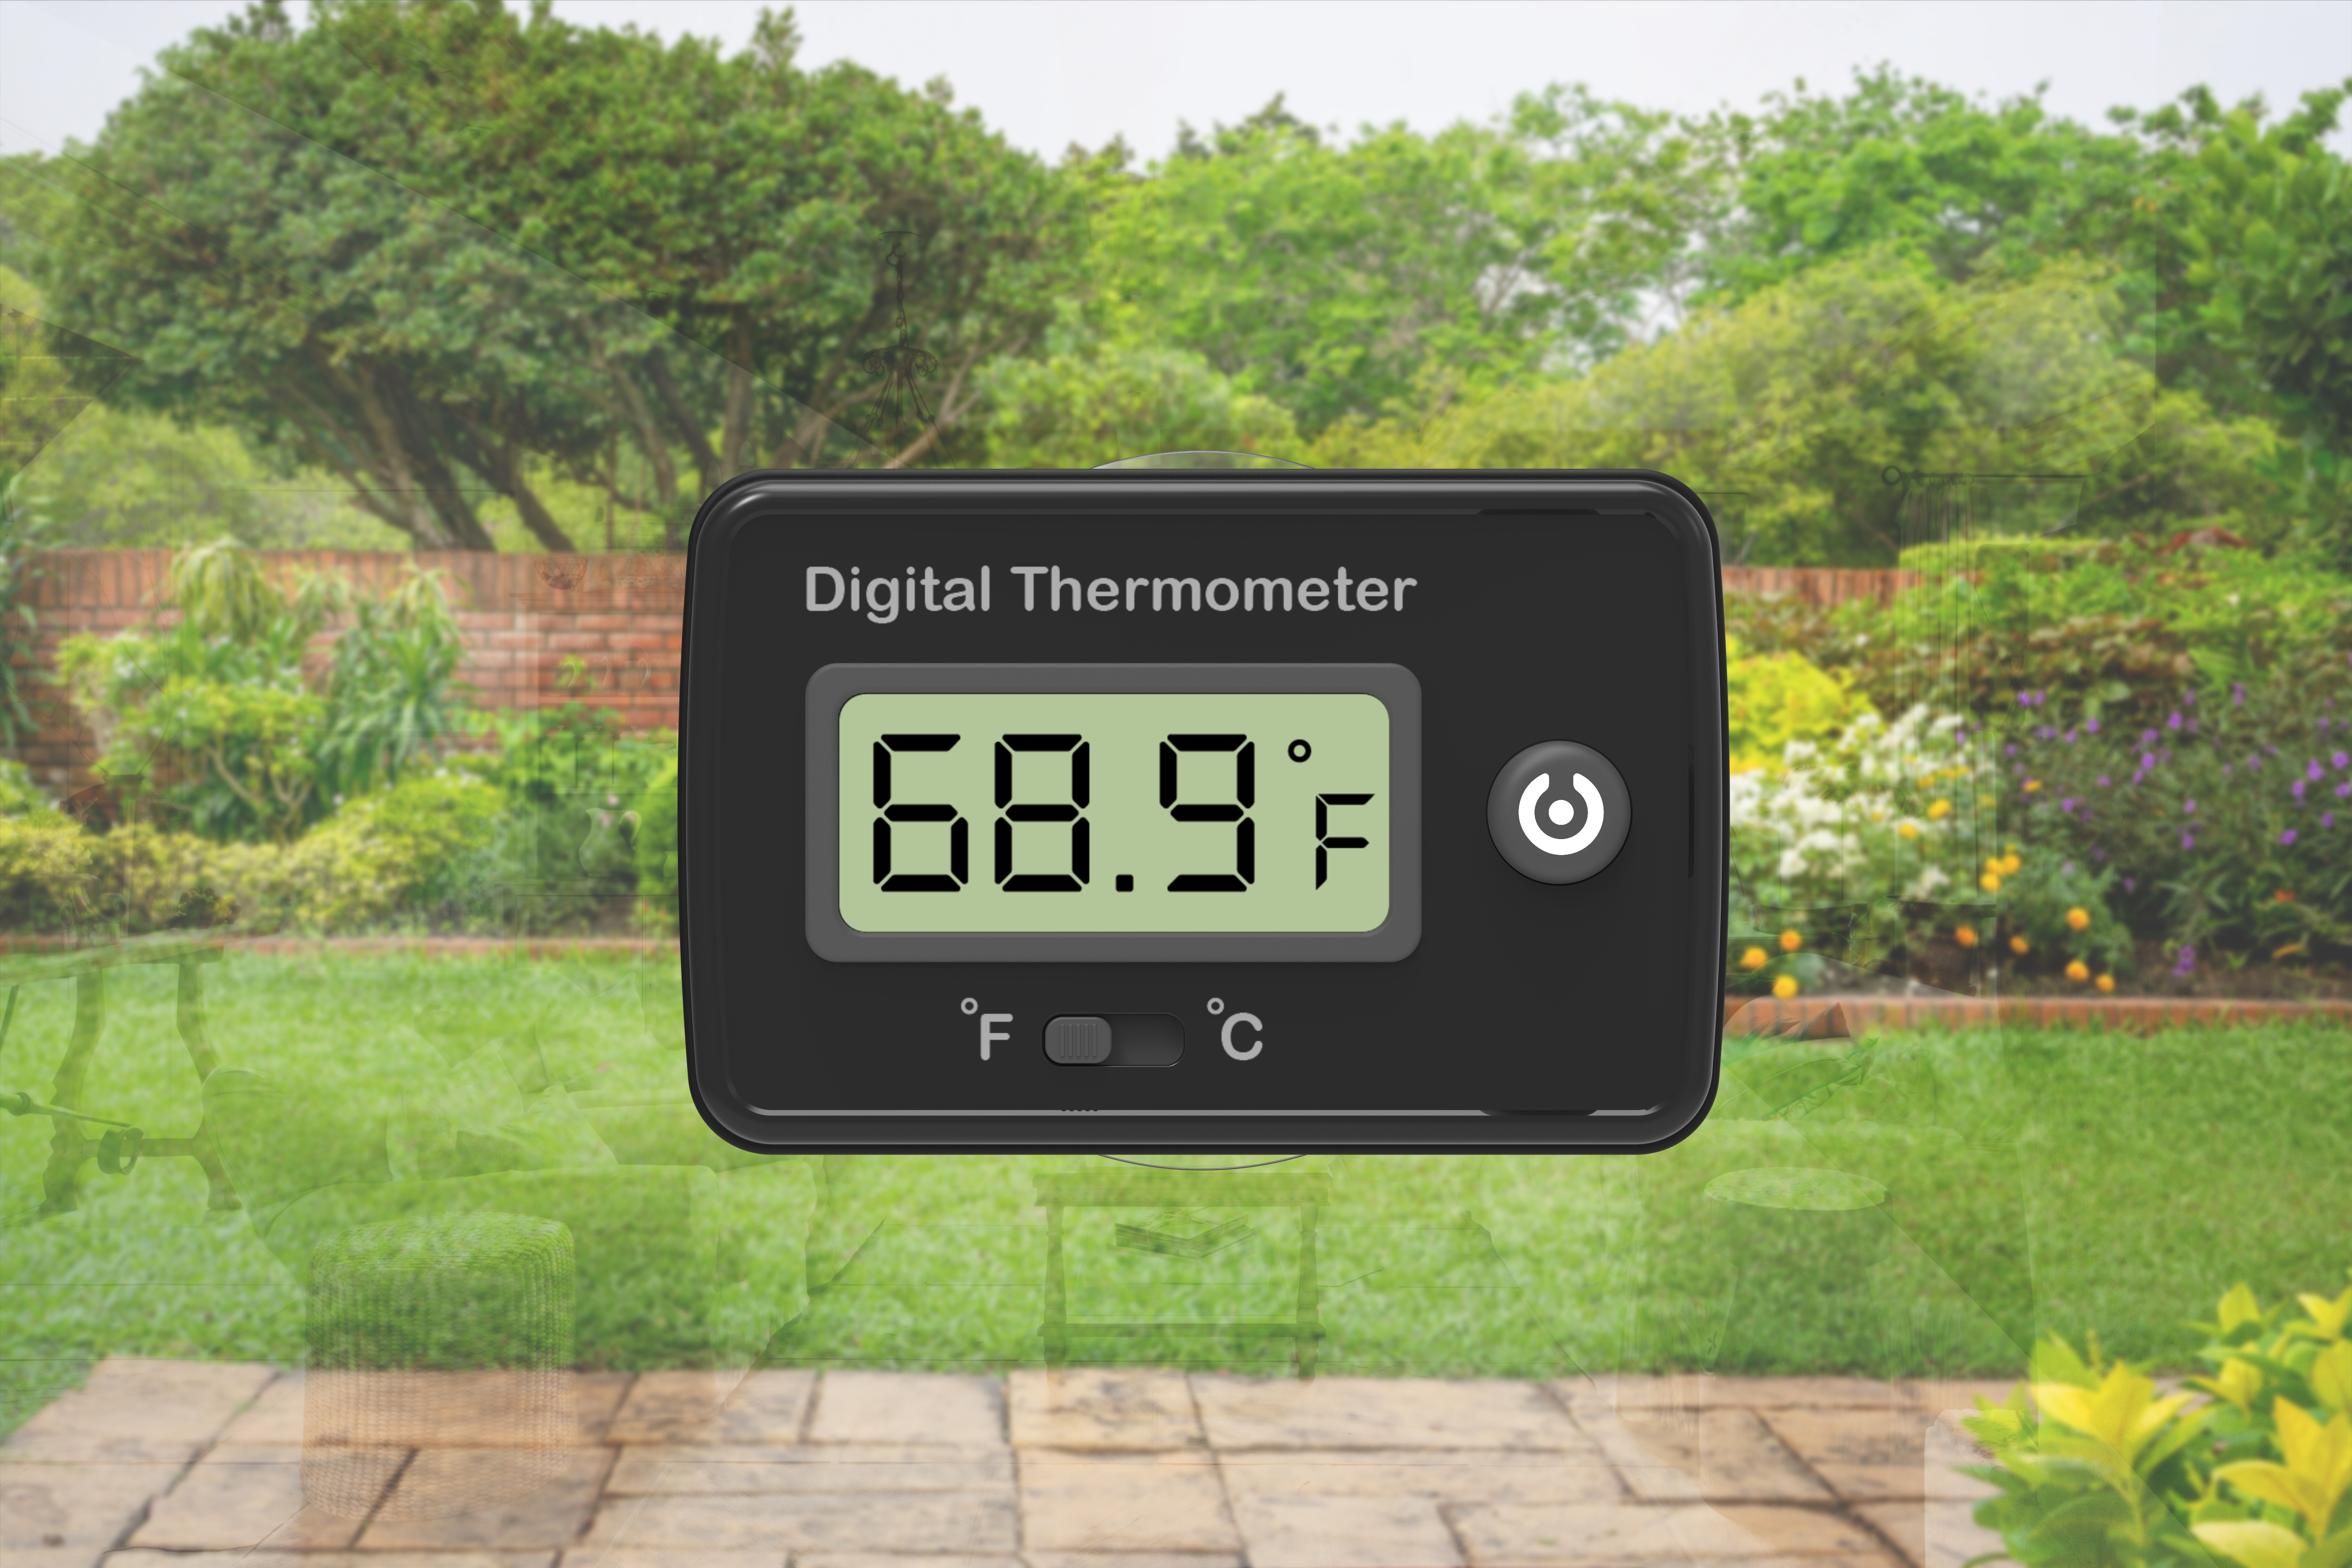 CX Digital Thermometer